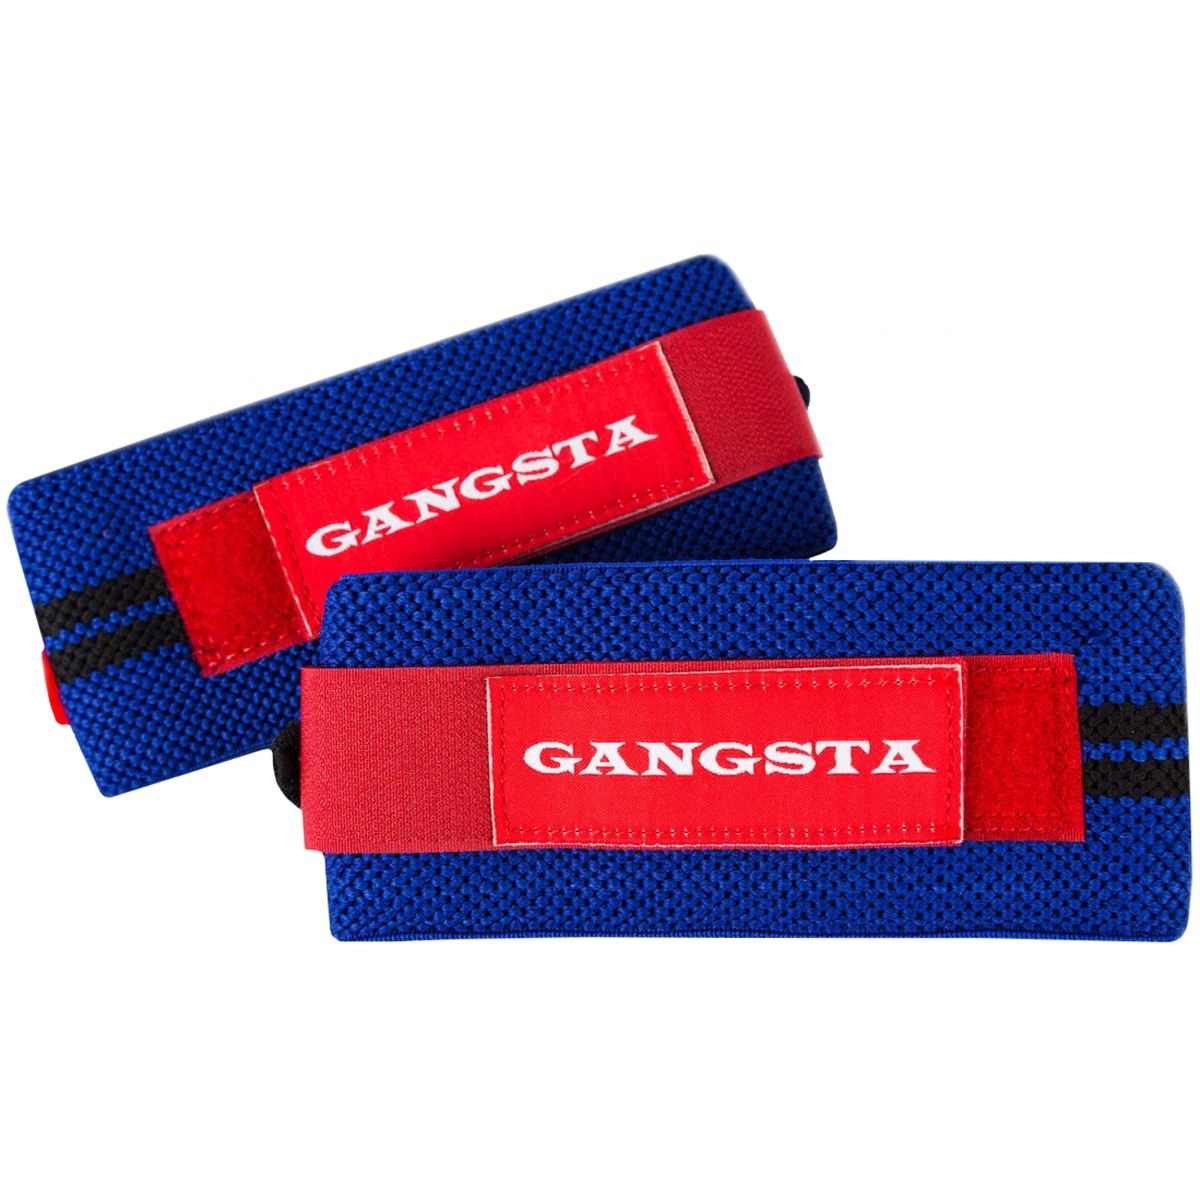 Sling Shot Gangsta Wraps by Mark Bell